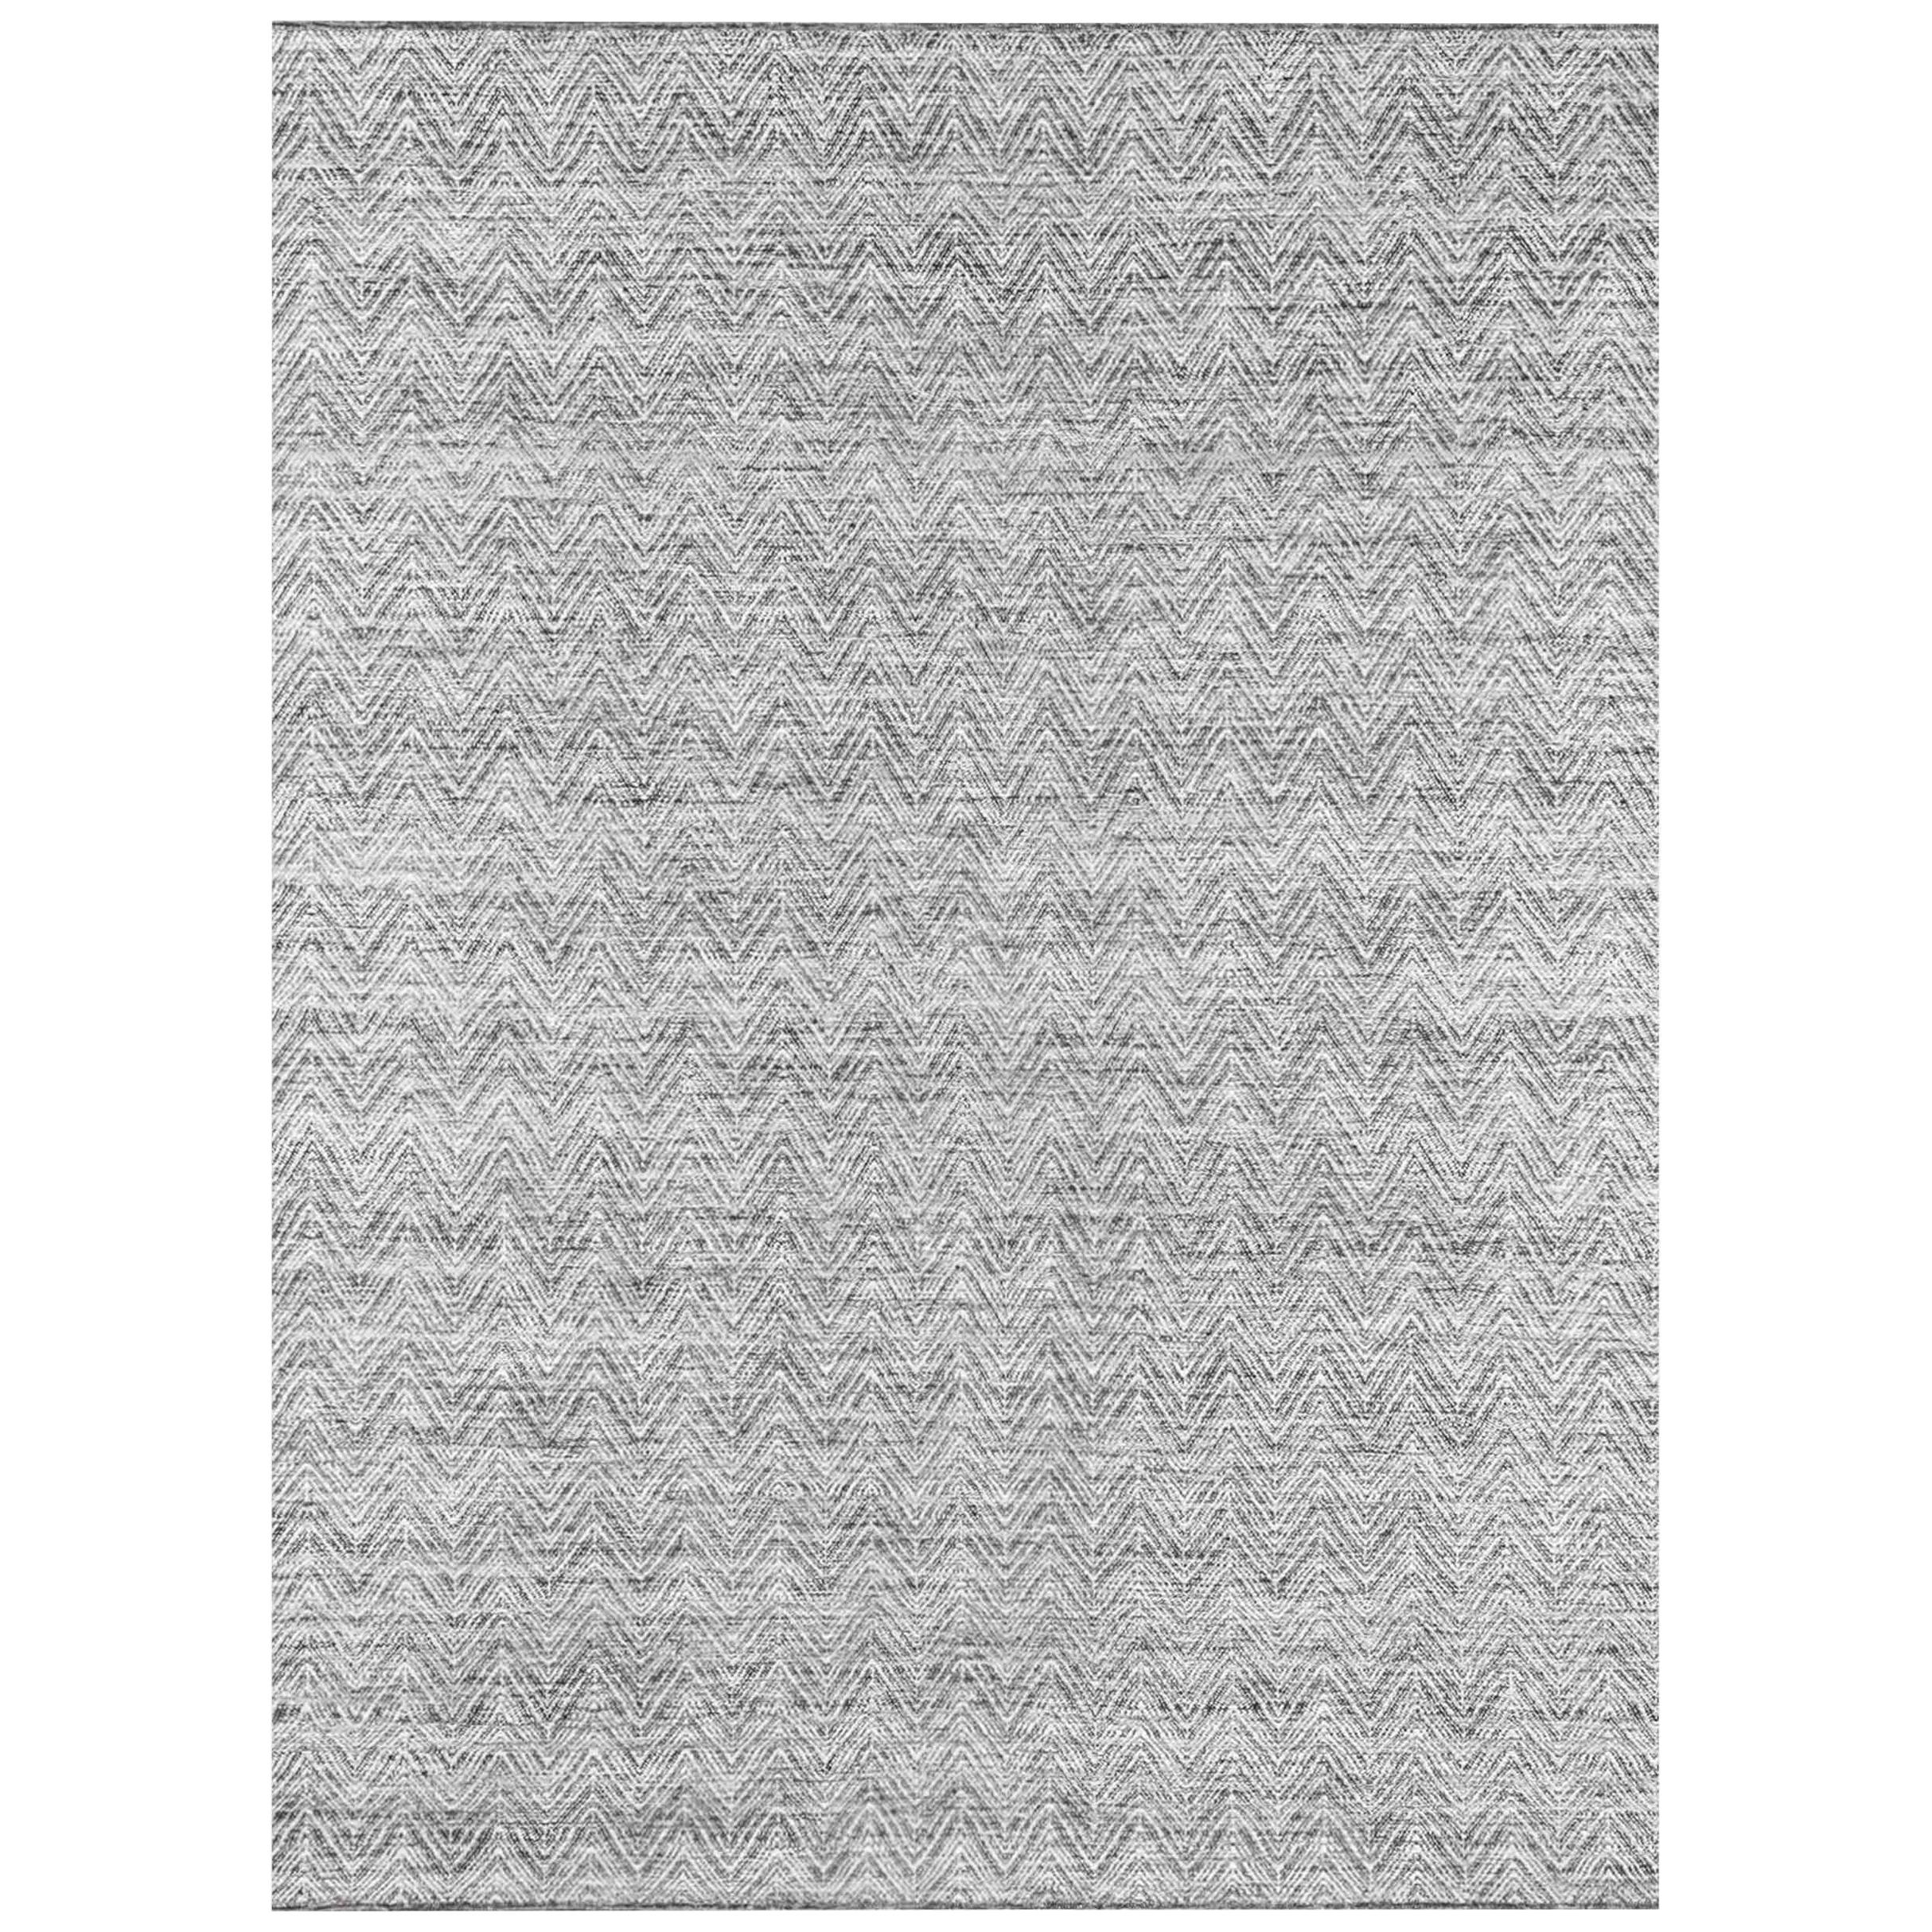 For Sale: Black (Charcoal) Ben Soleimani Ceyah Rug– Hand-woven Plush Textured Wool + Linen Charcoal 6'x9'